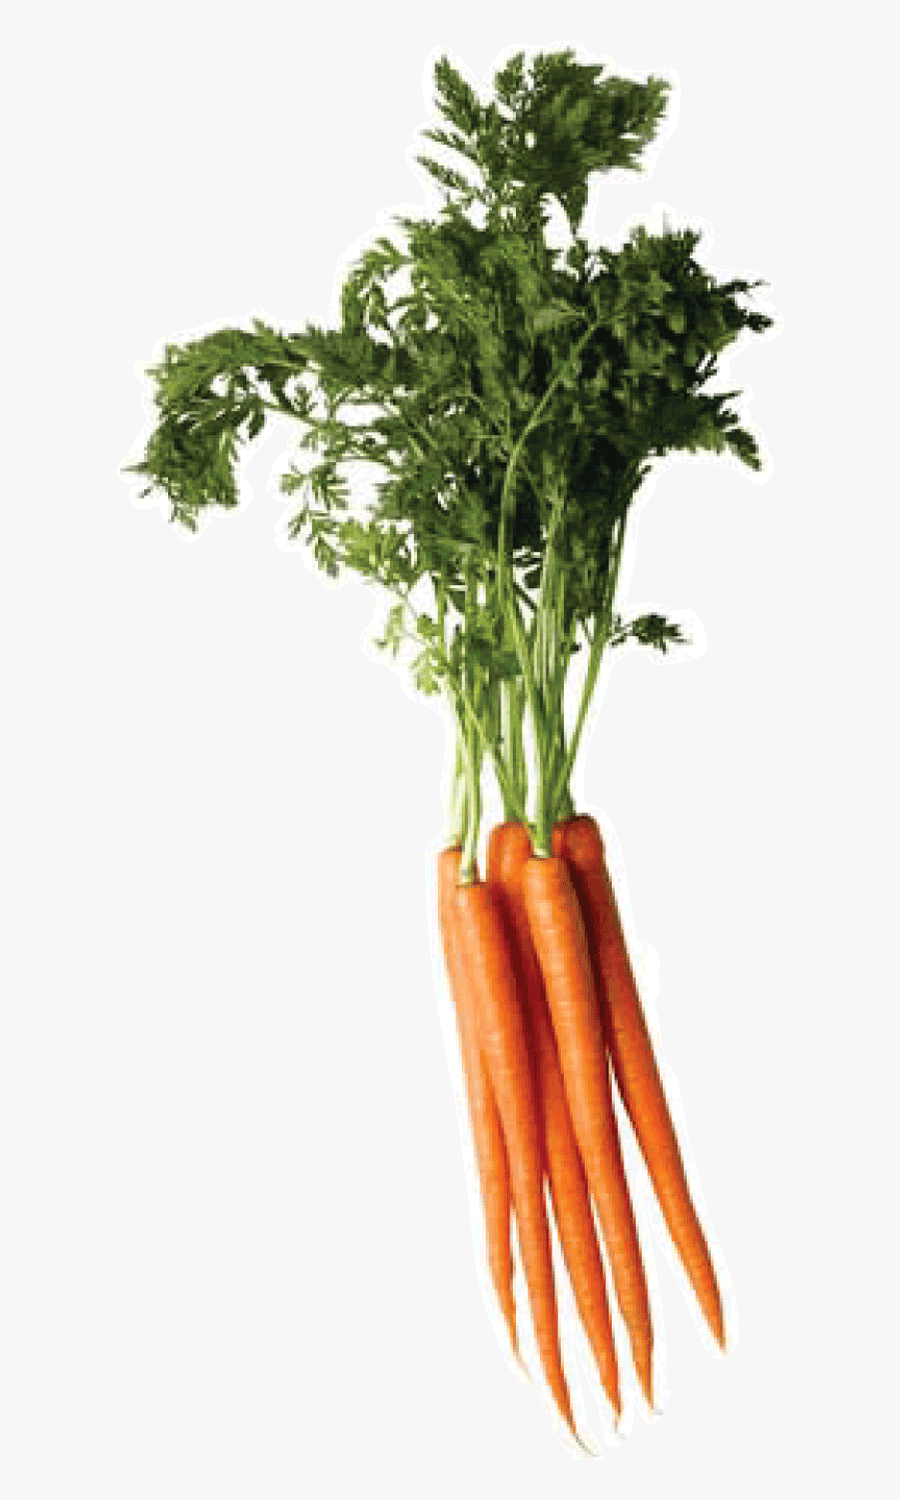 Carrot Png Image - Carrot Png Top, Transparent Clipart